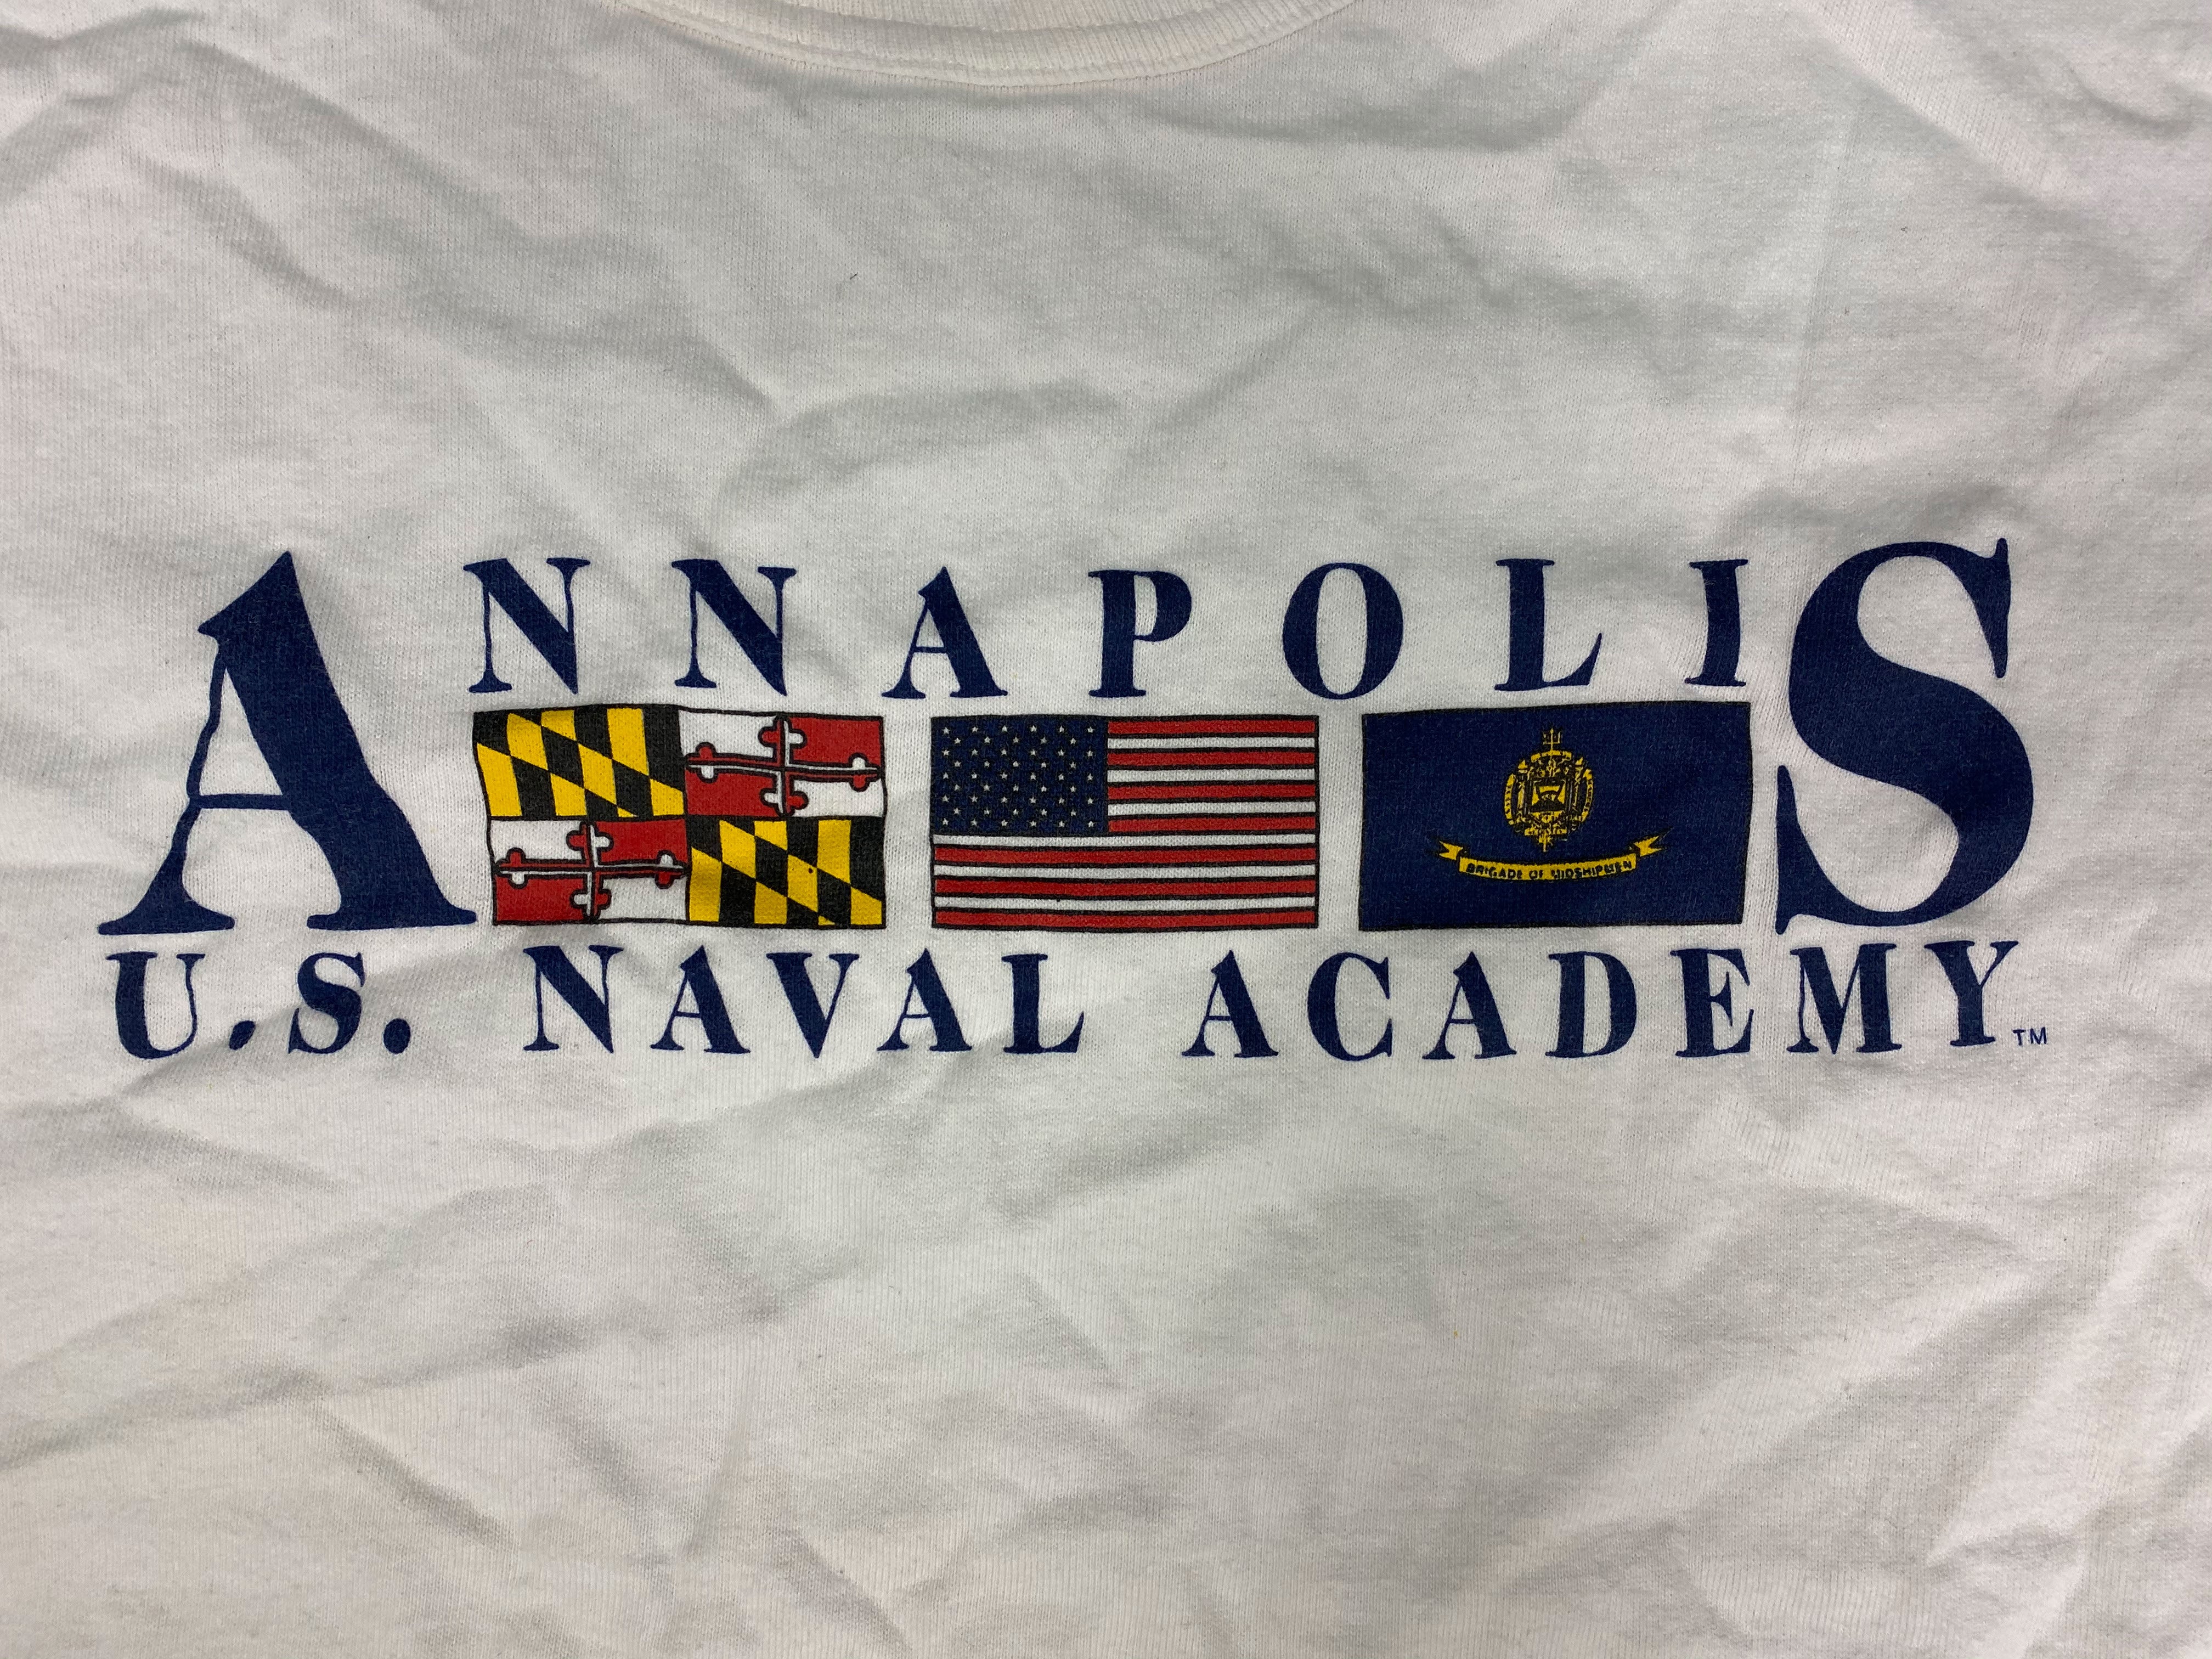 Champion Annapolis US Naval Academy Tee - White